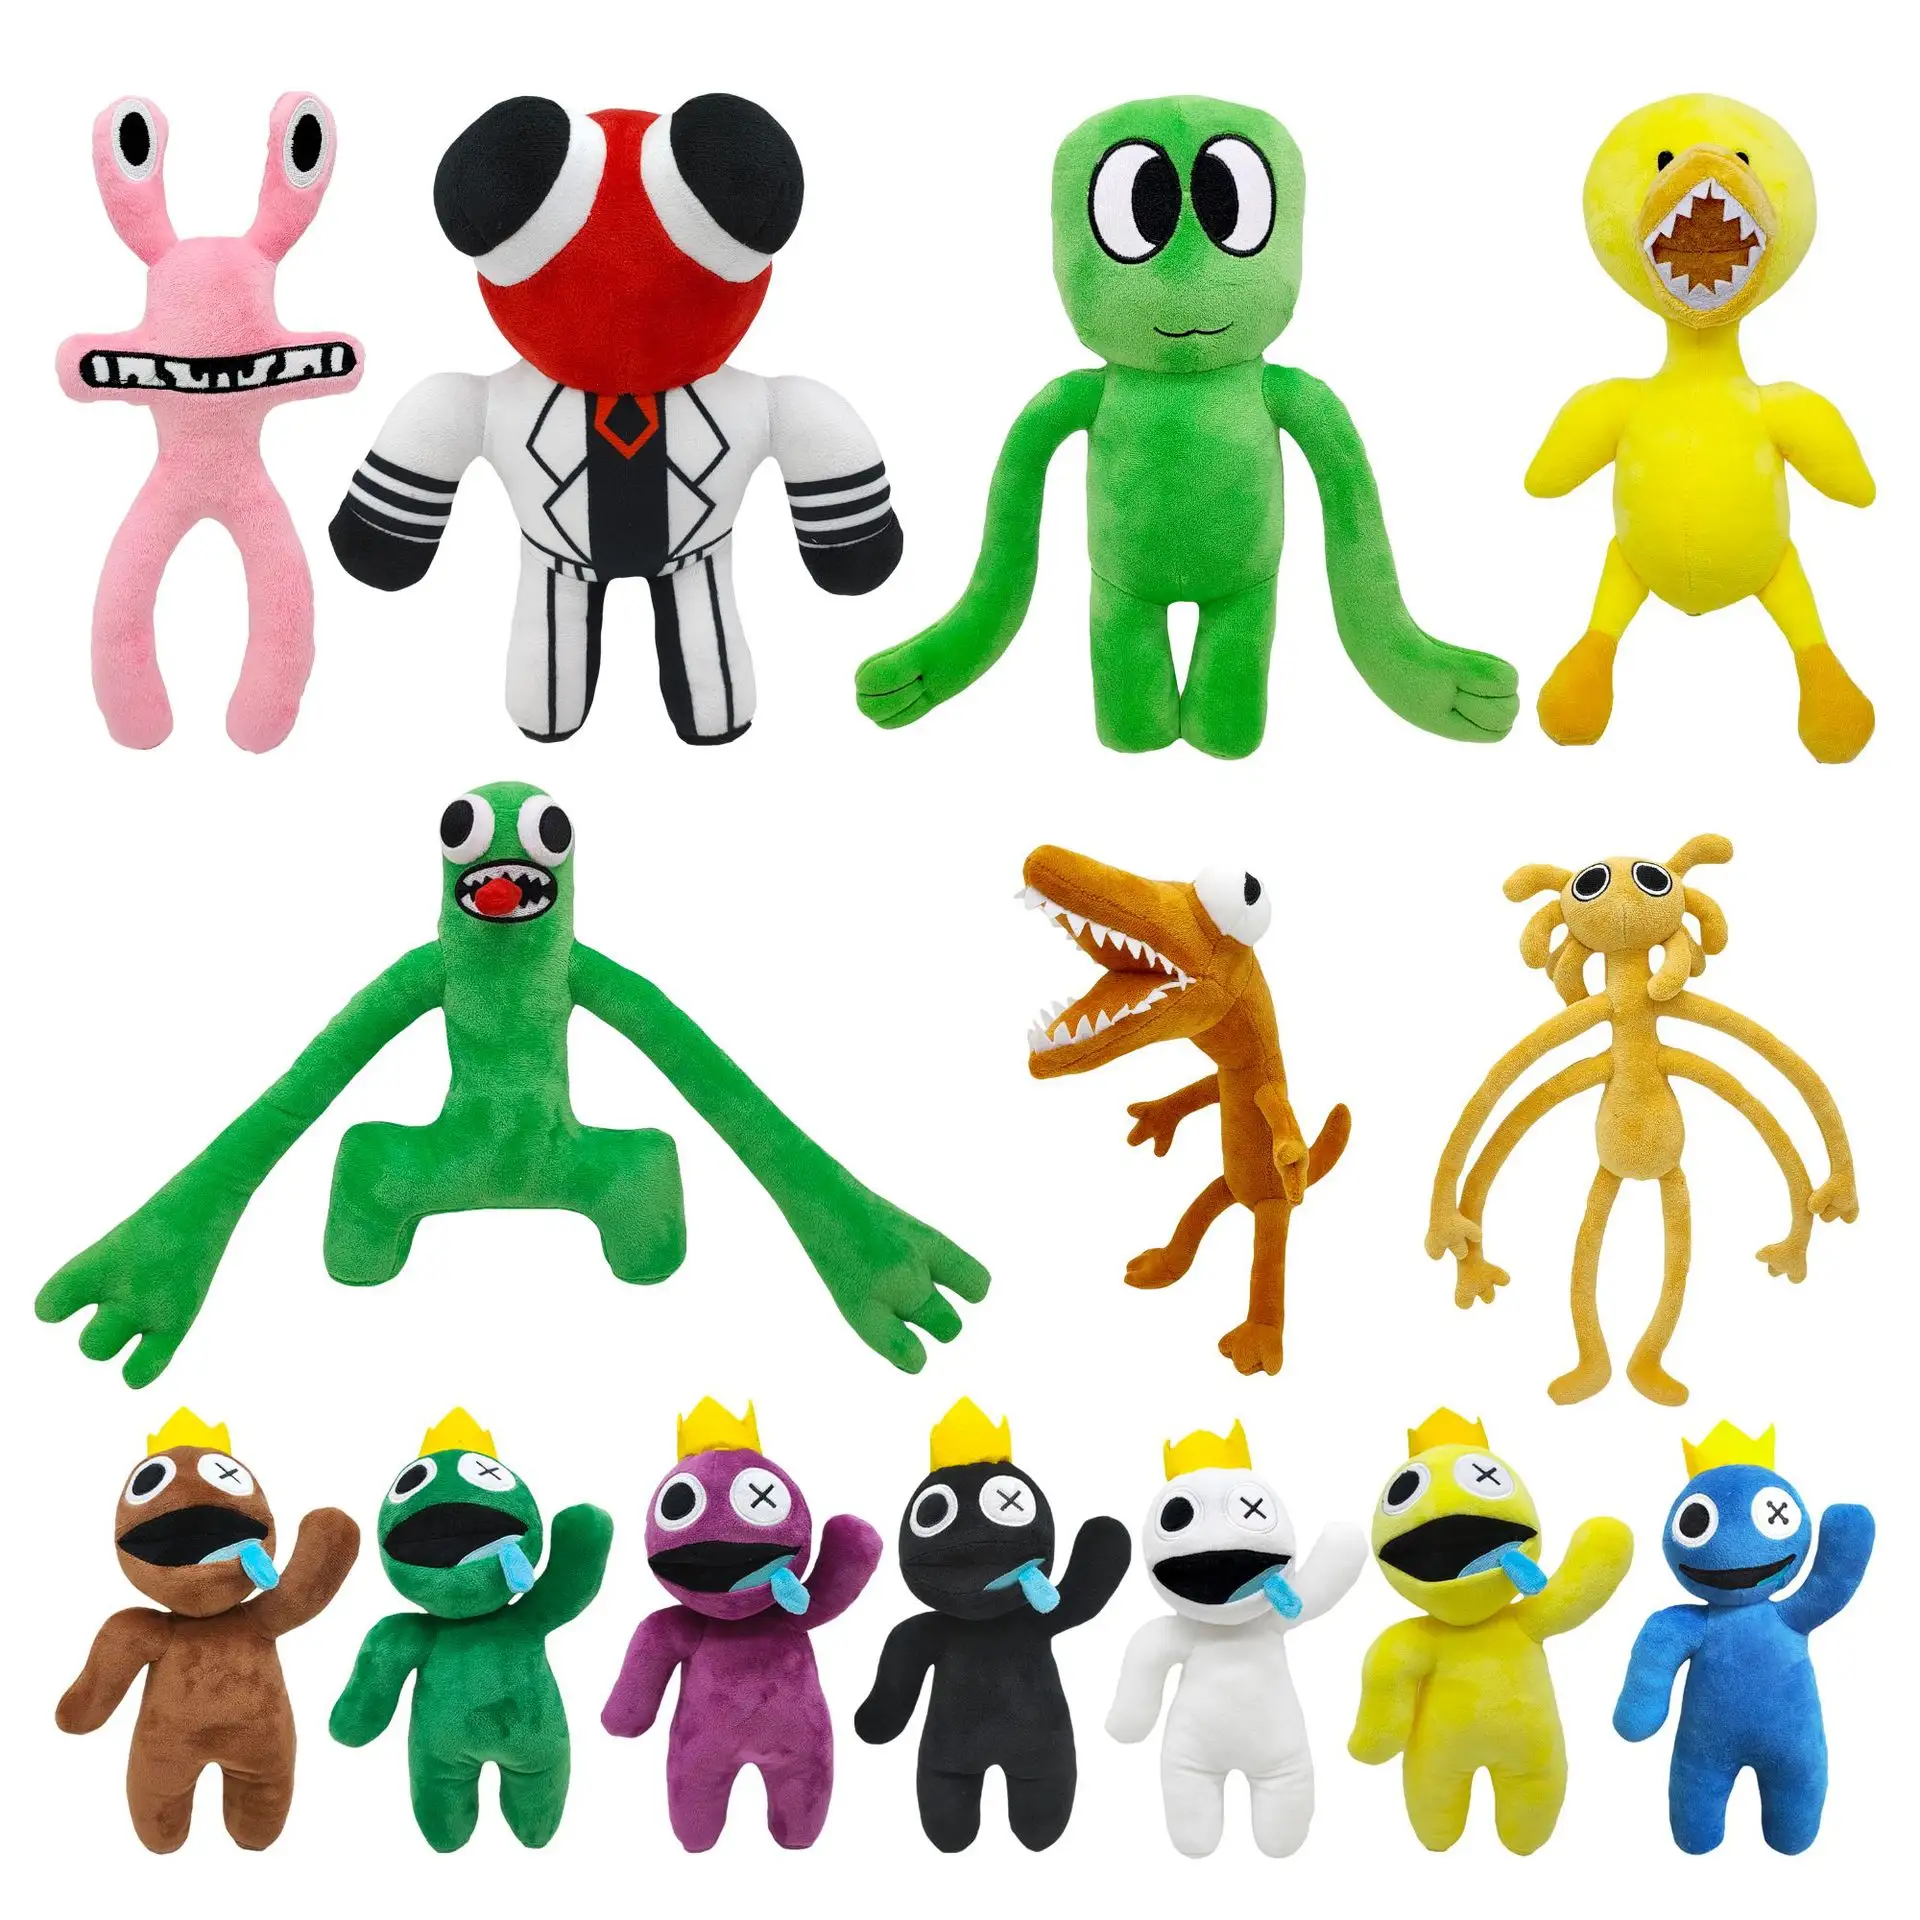 Rainbow Friends Ro-blox Plush Toys Newest Cartoon Games Stuffed Animals Ro-blox Rainbow Friends